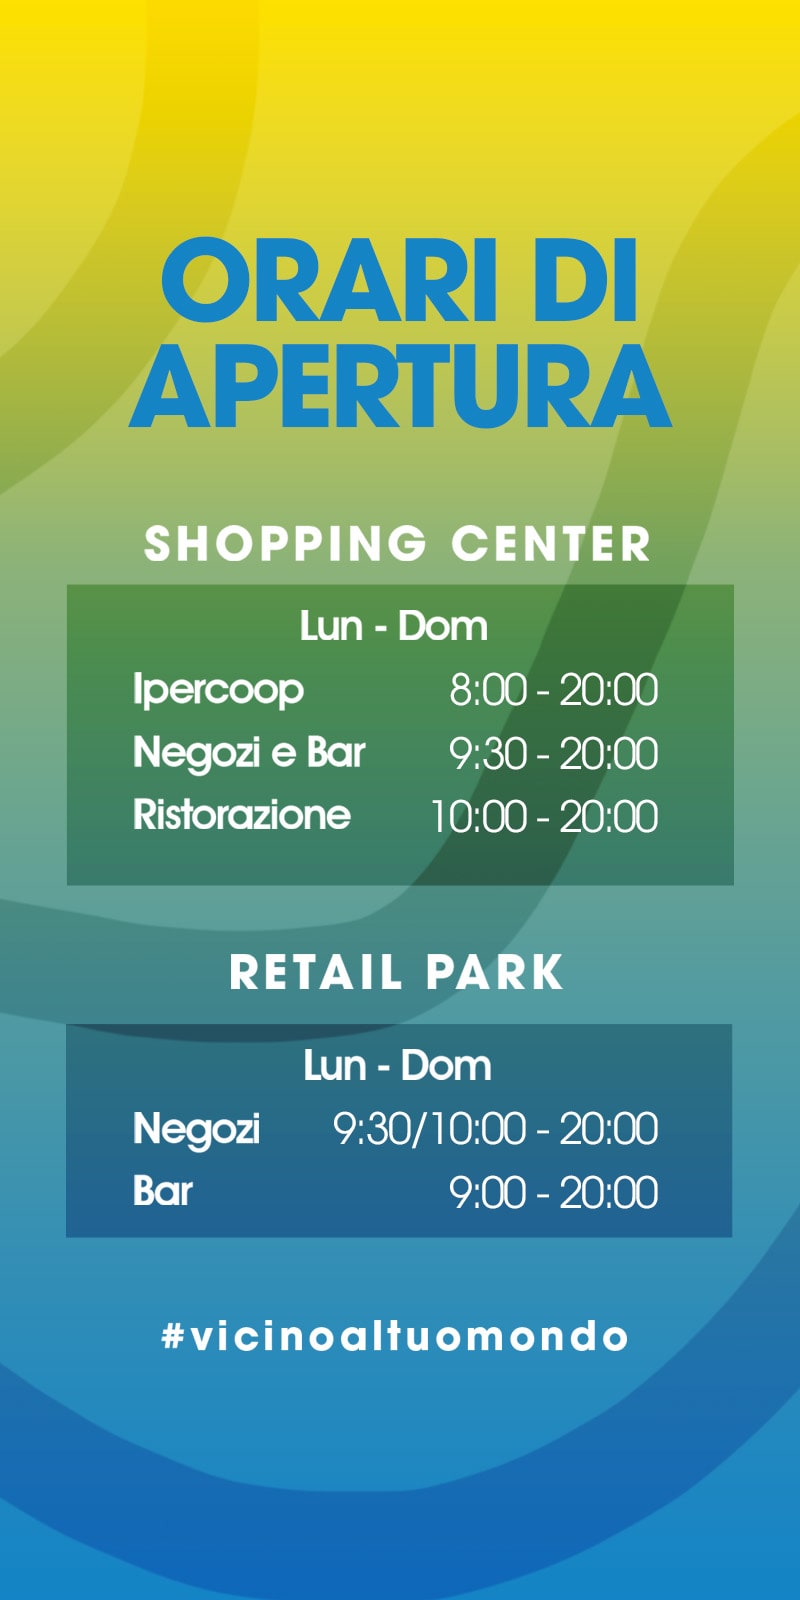 Nuovi orari - Mondovicino Shopping Center & Retail Park